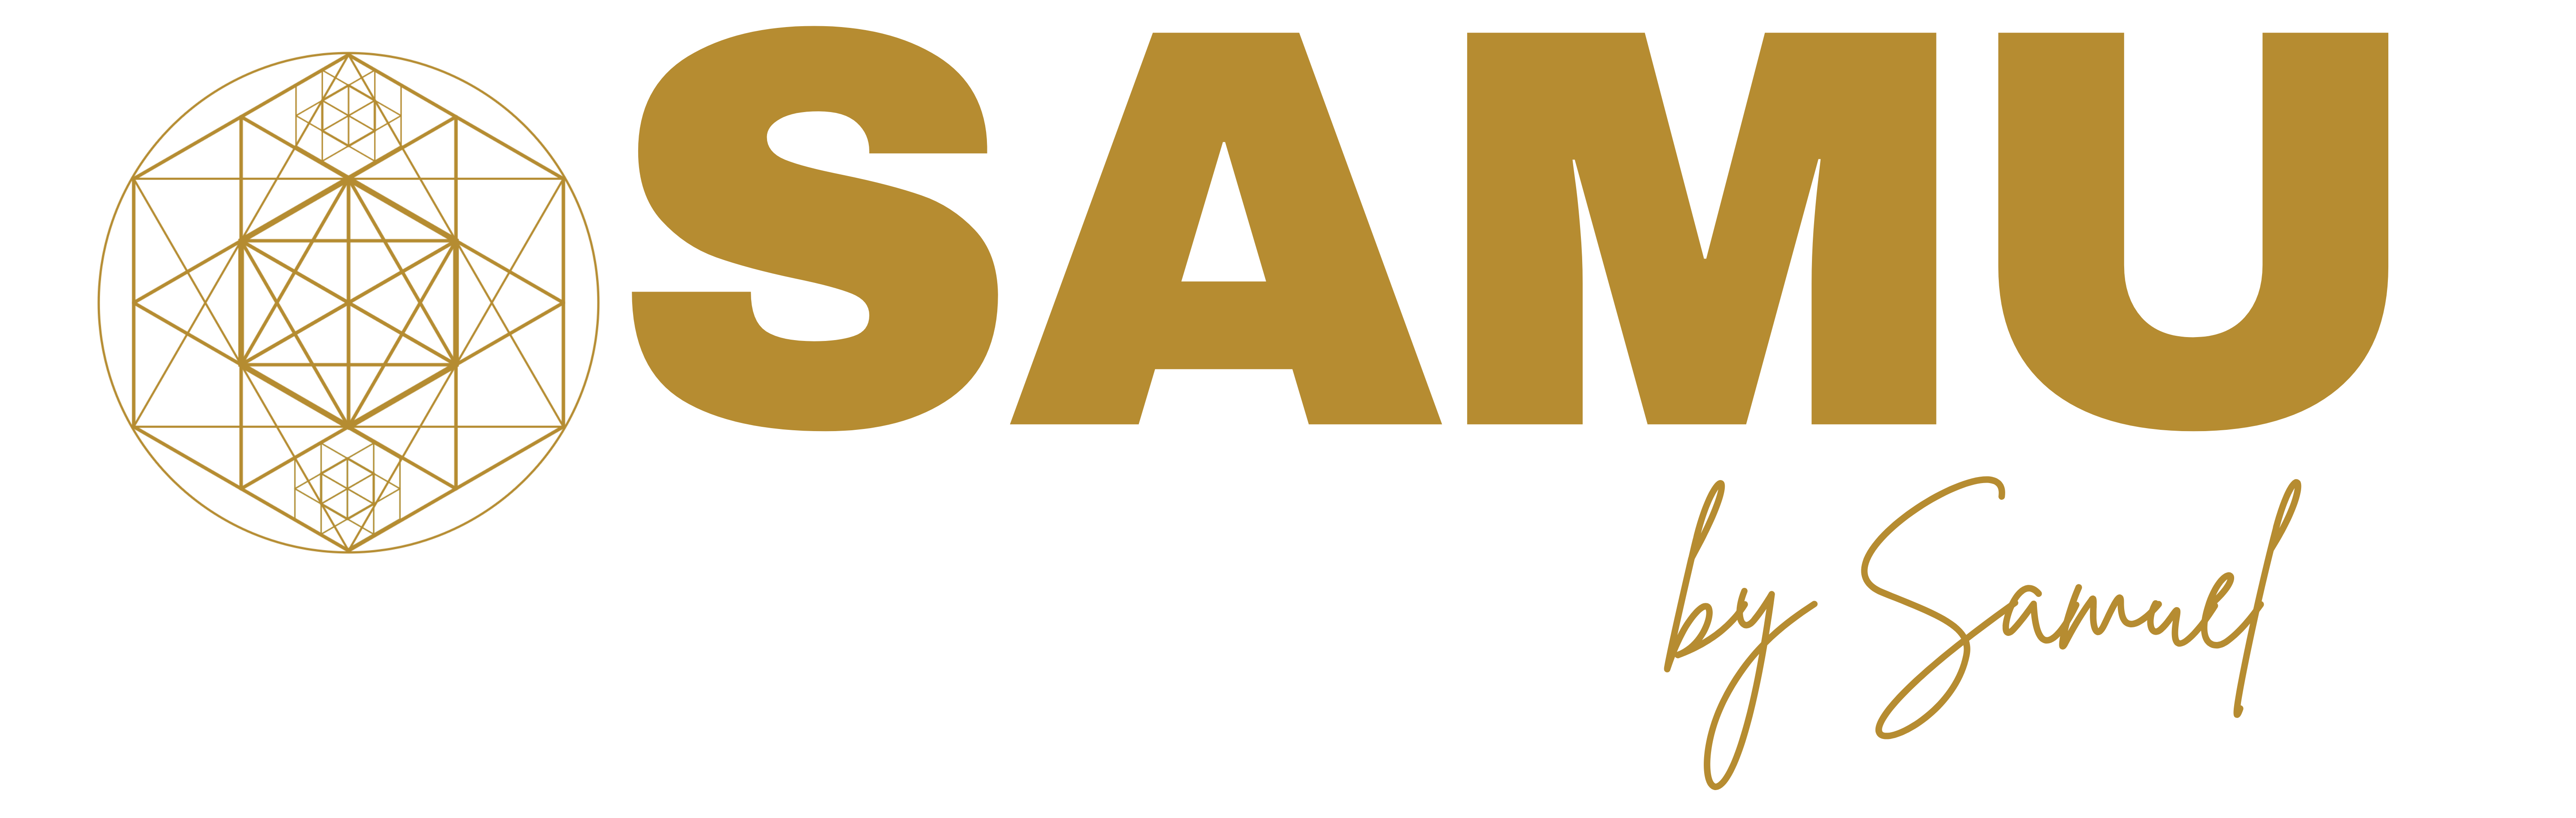 Samu Consulting